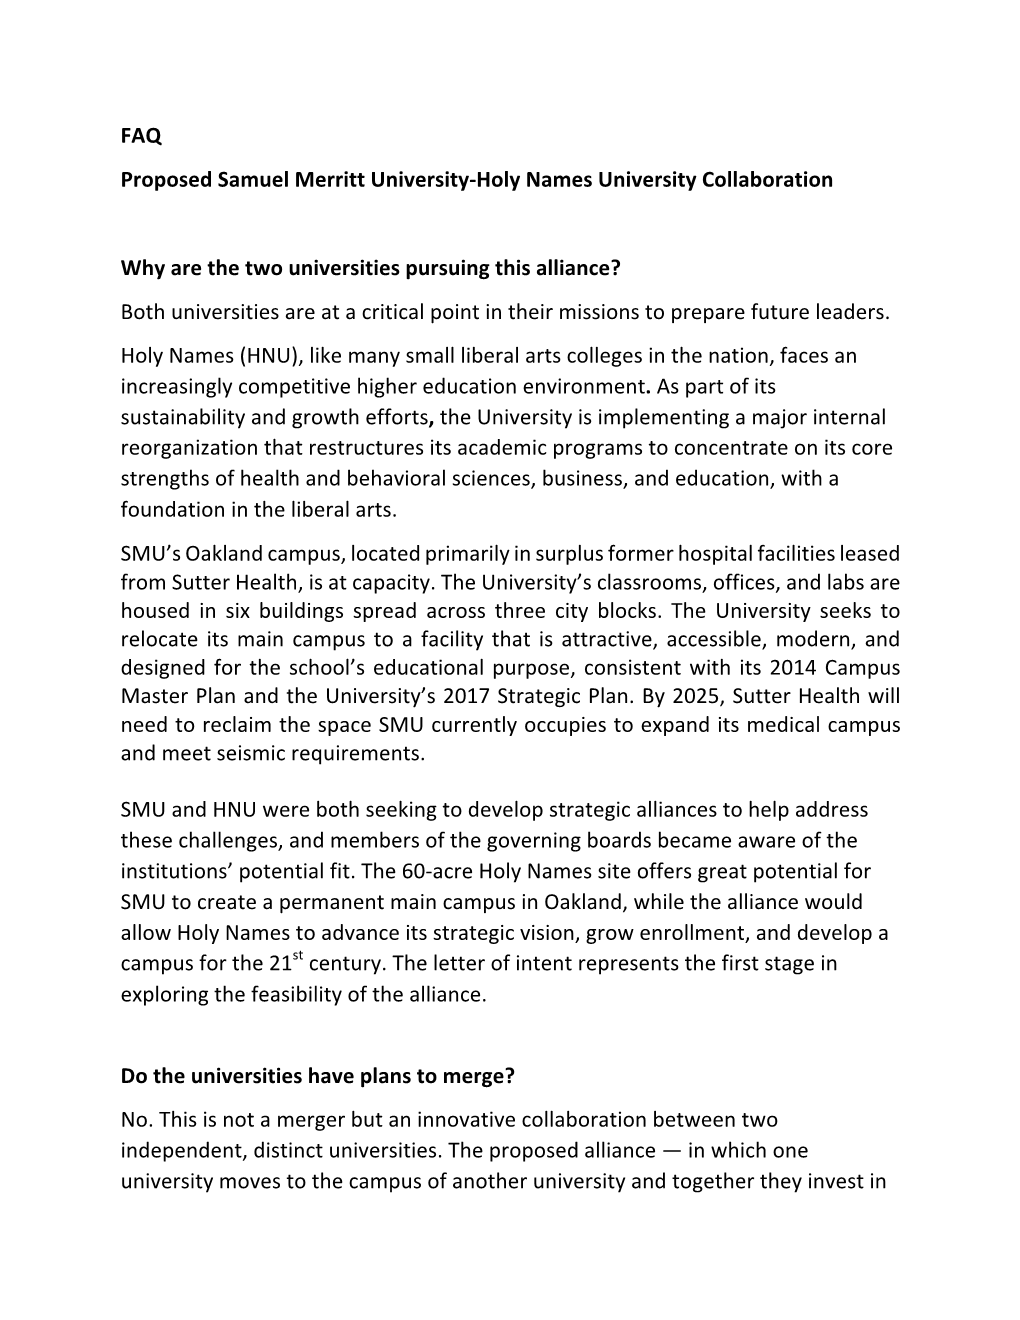 FAQ Proposed Samuel Merritt University-Holy Names University Collaboration